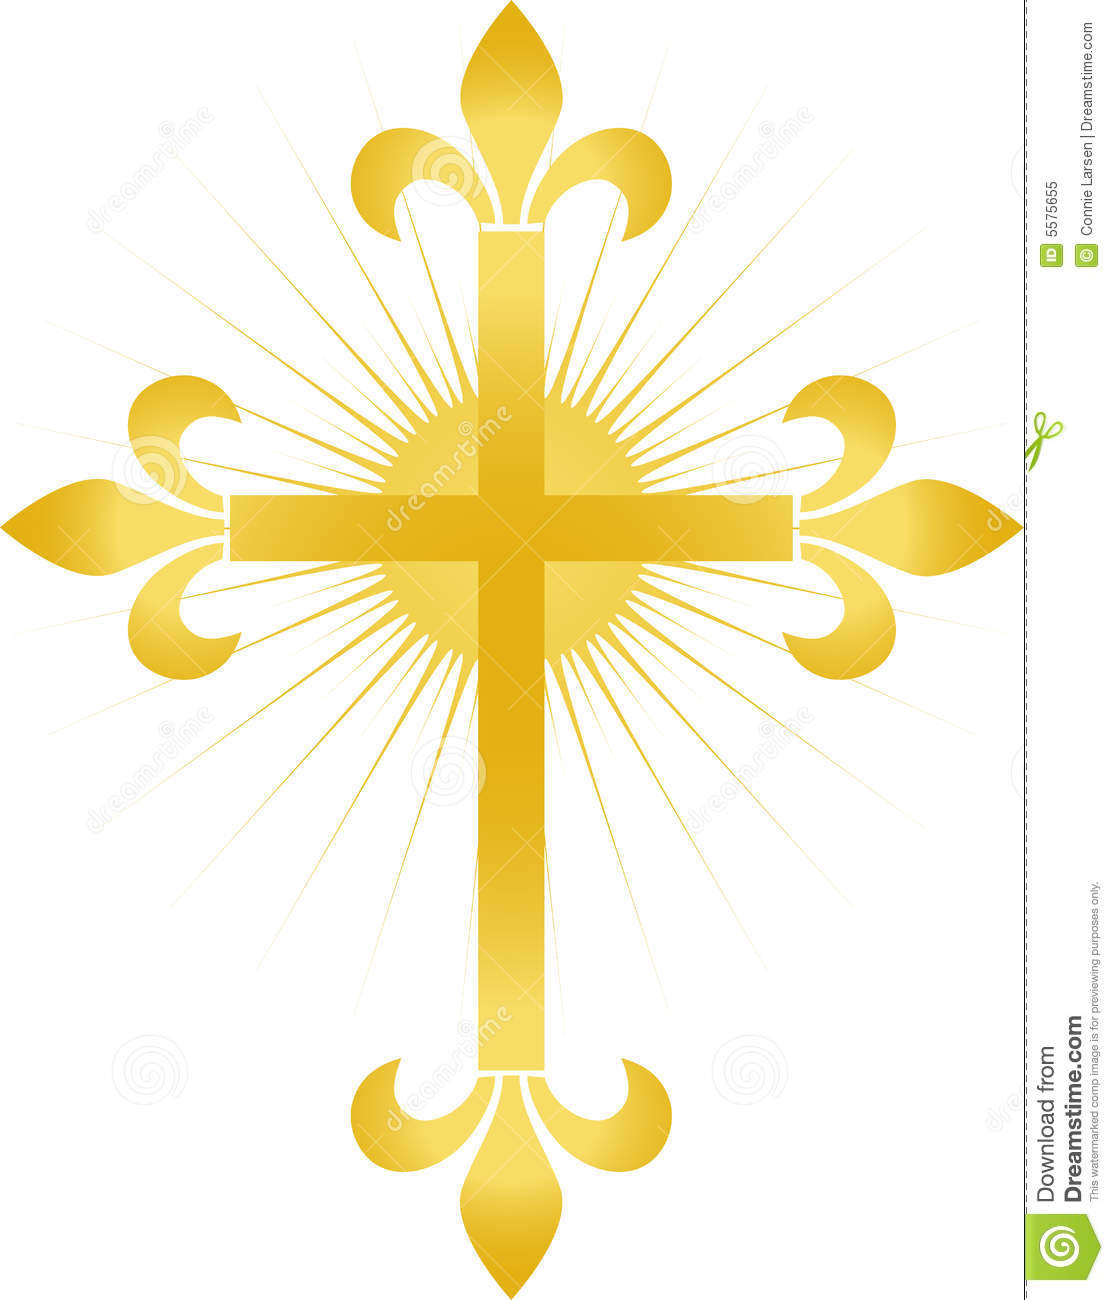 Illustration Of An Ornate Golden Cross With Fleur De Lis Details